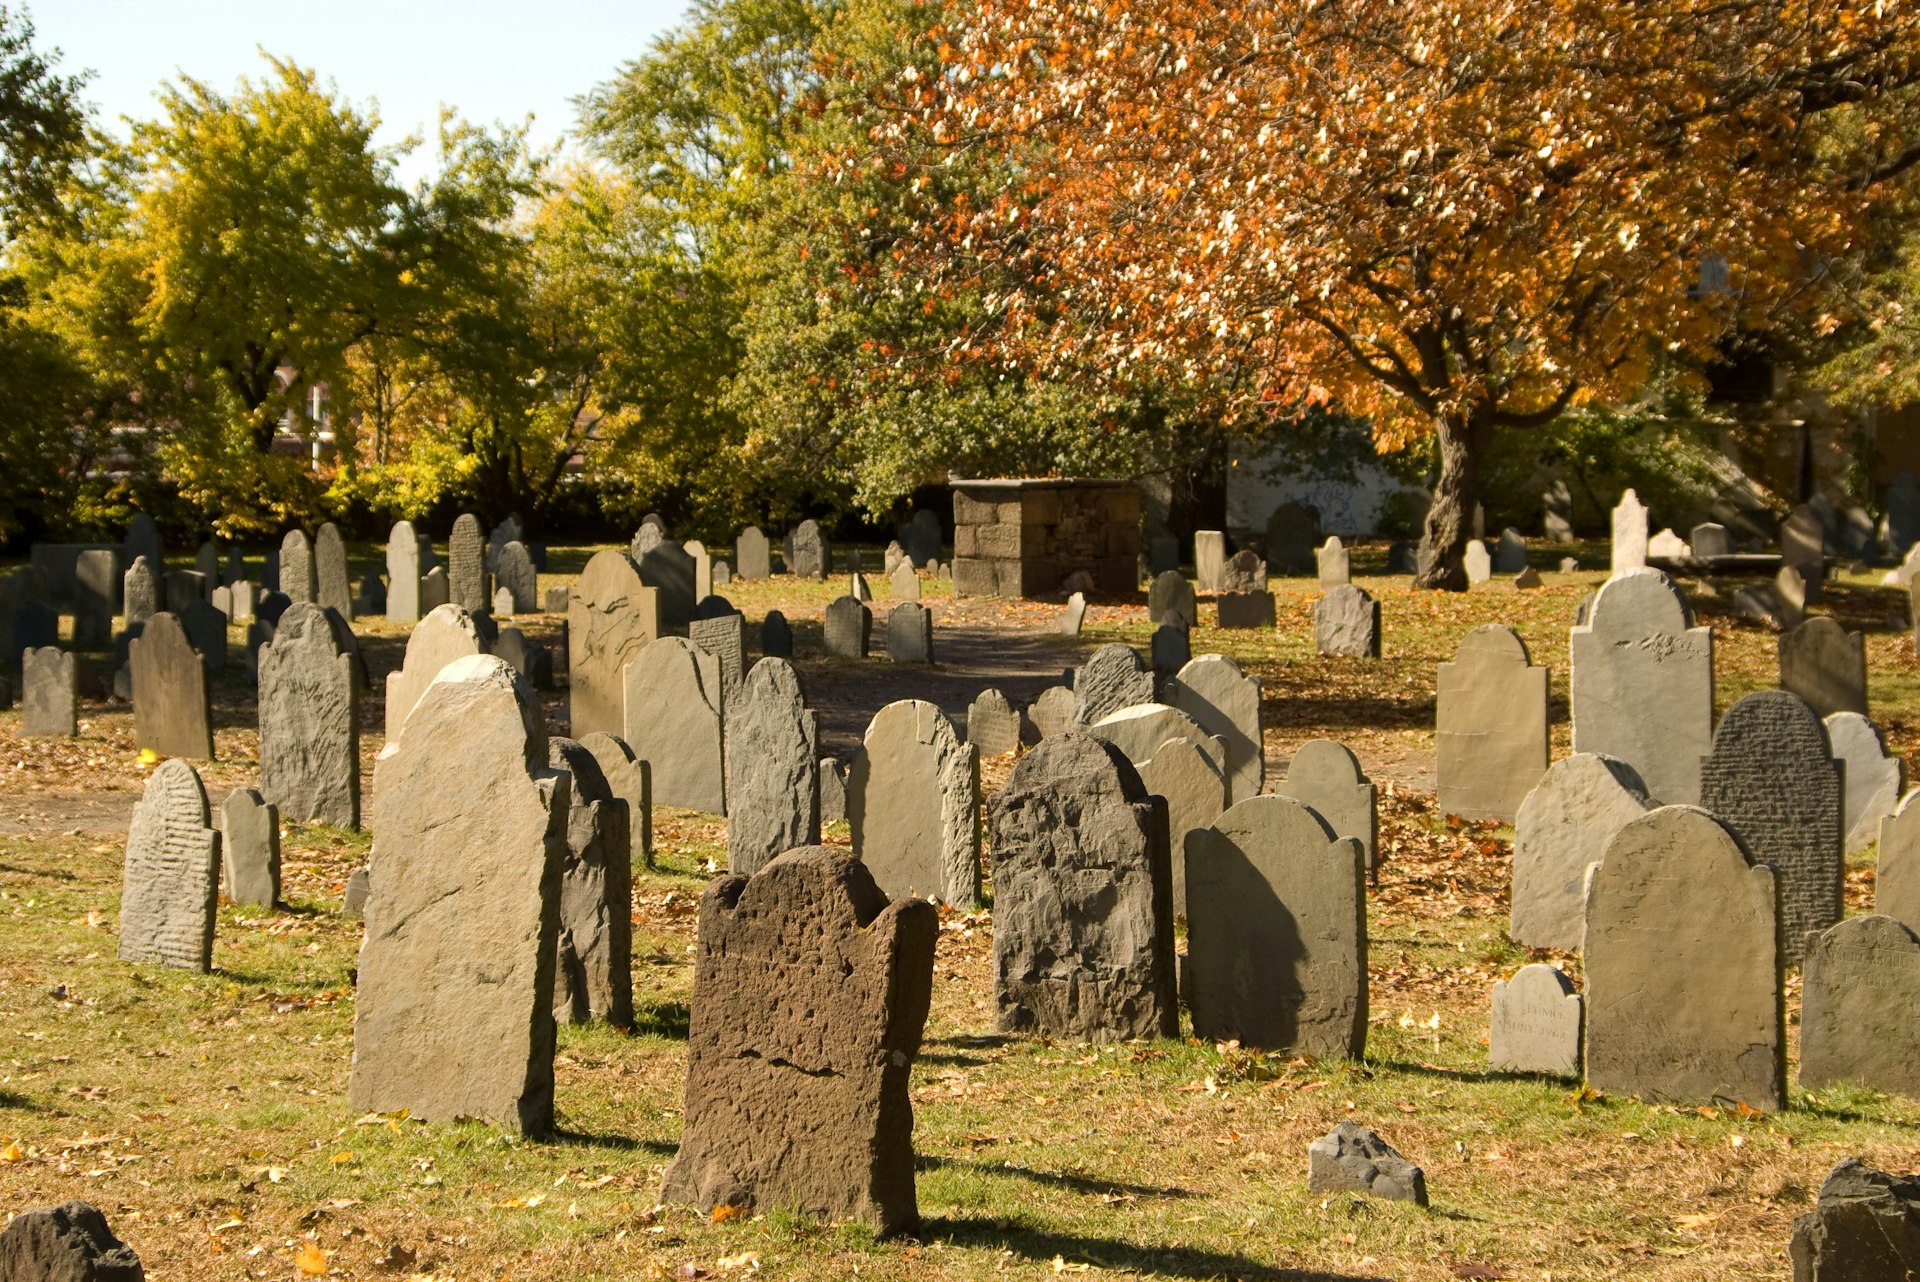 The Burying Point graveyard in Salem, Massachusetts